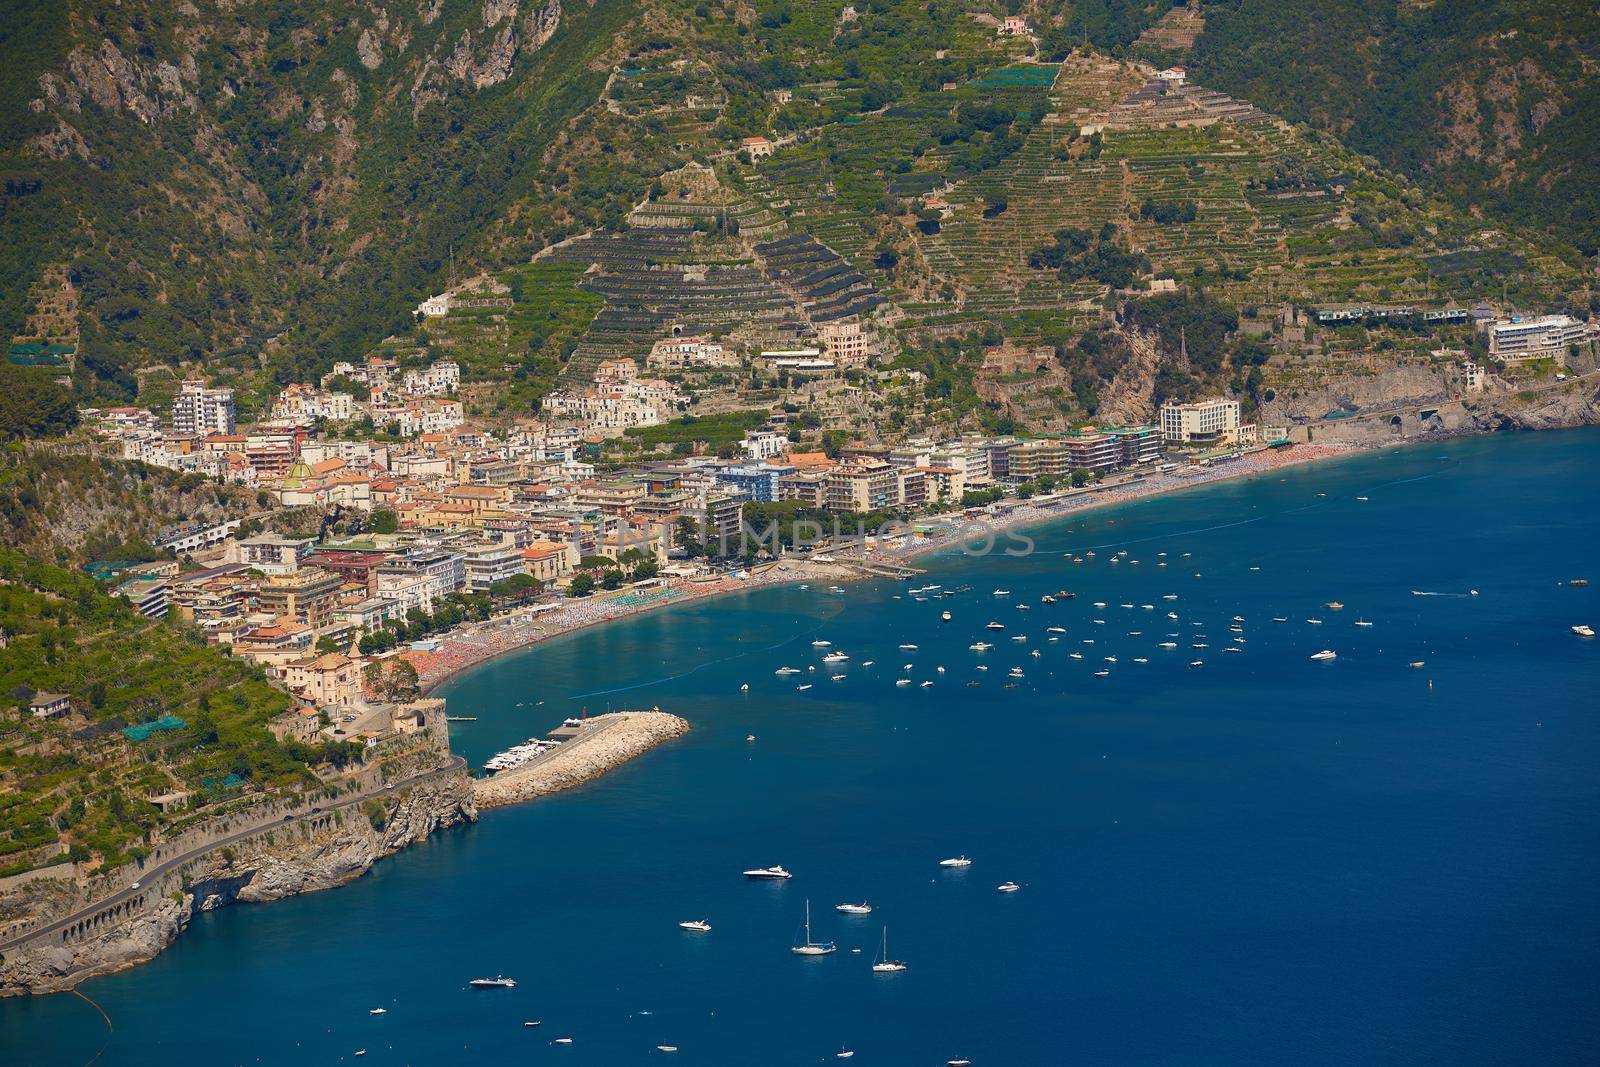 High angle view of Minori and Maiori, Amalfi coast, Italy.